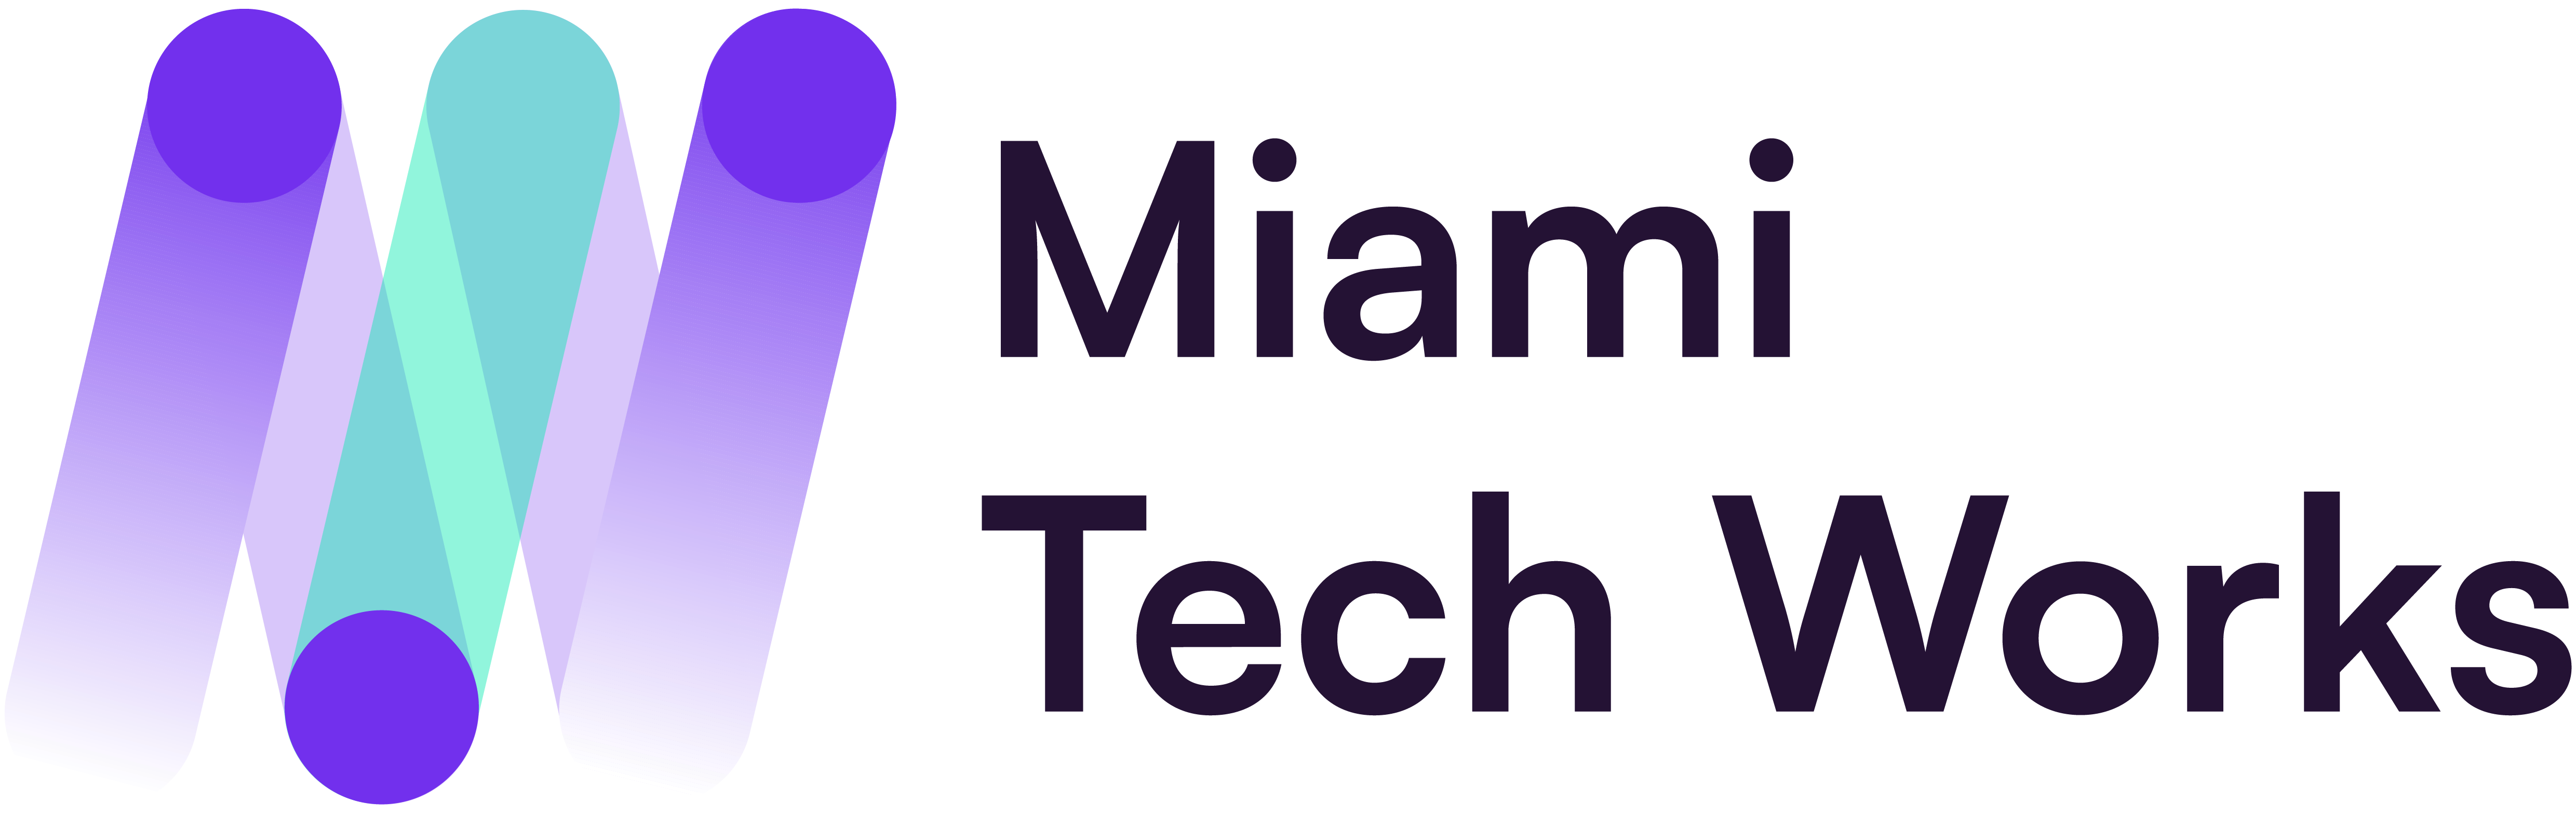 Miami Tech Works & The Tech Talent Coalition.